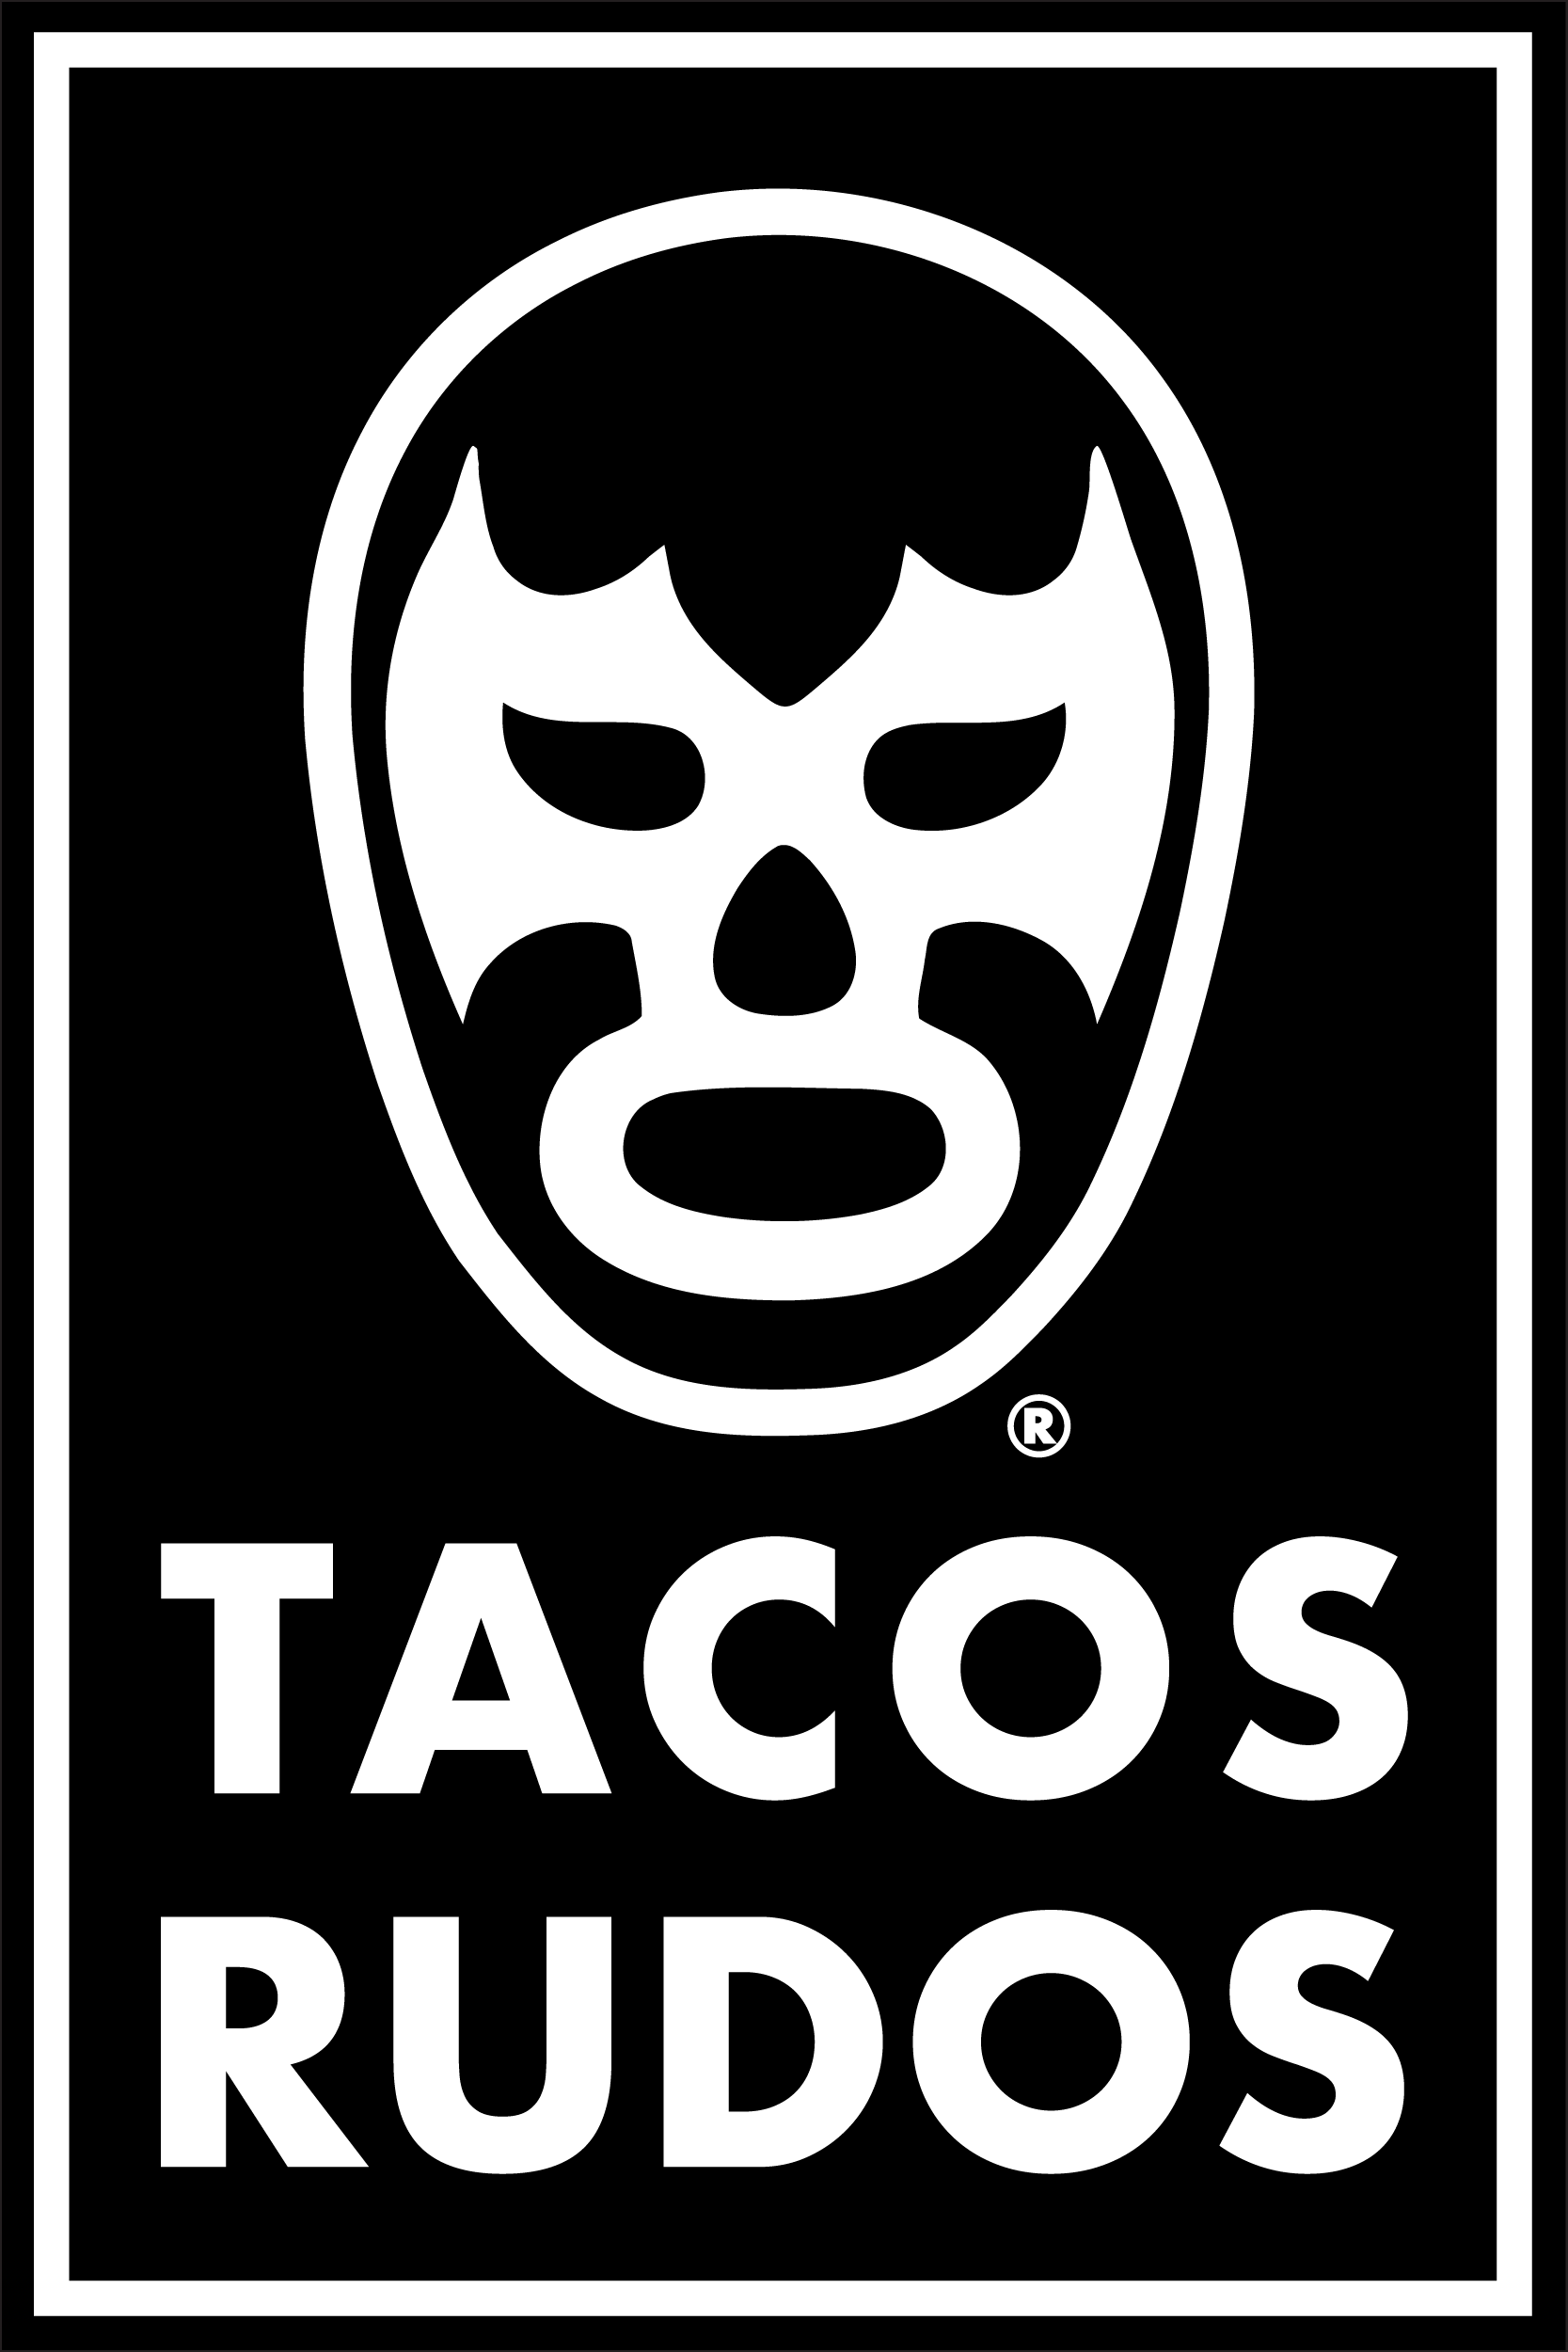 Tacos Rudos, Mexican food in Columbus Ohio